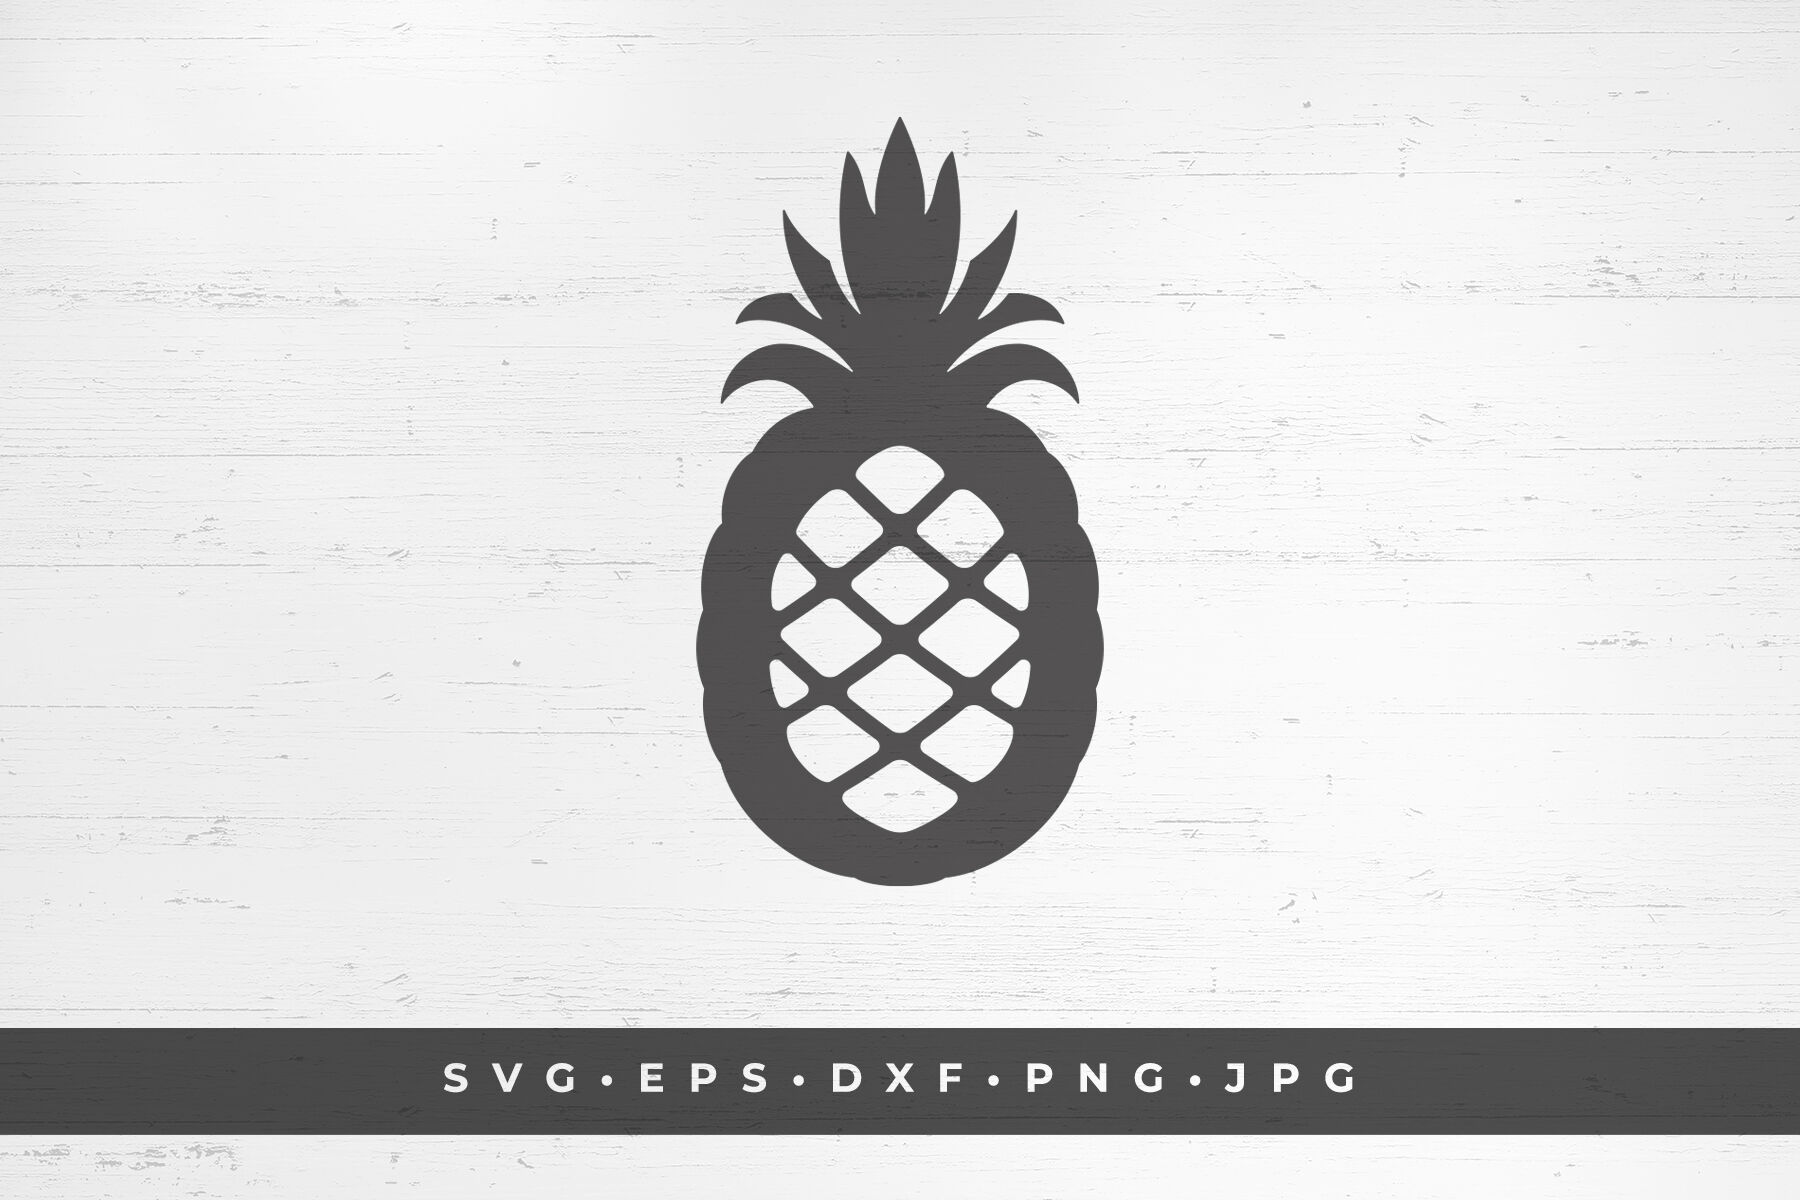 pineapple silhouette vector